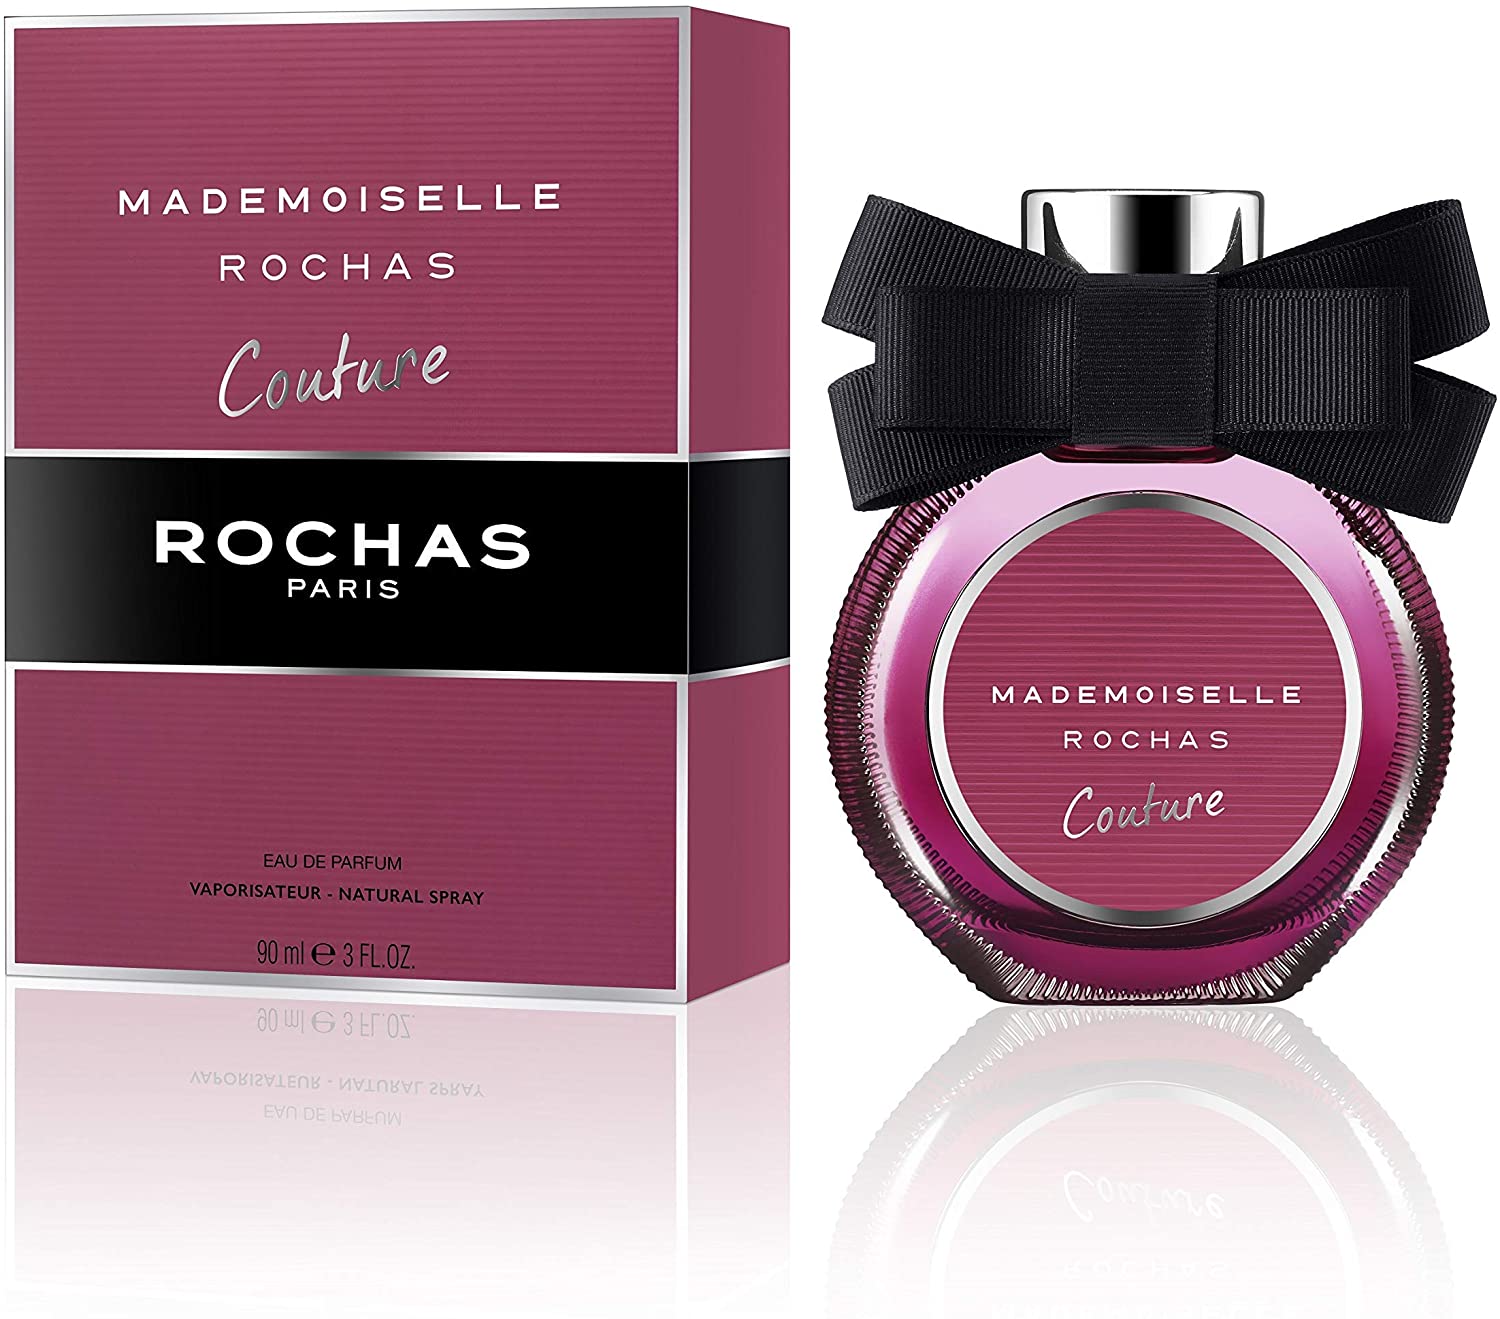 Mademoiselle Rochas Couture 90ml EDP